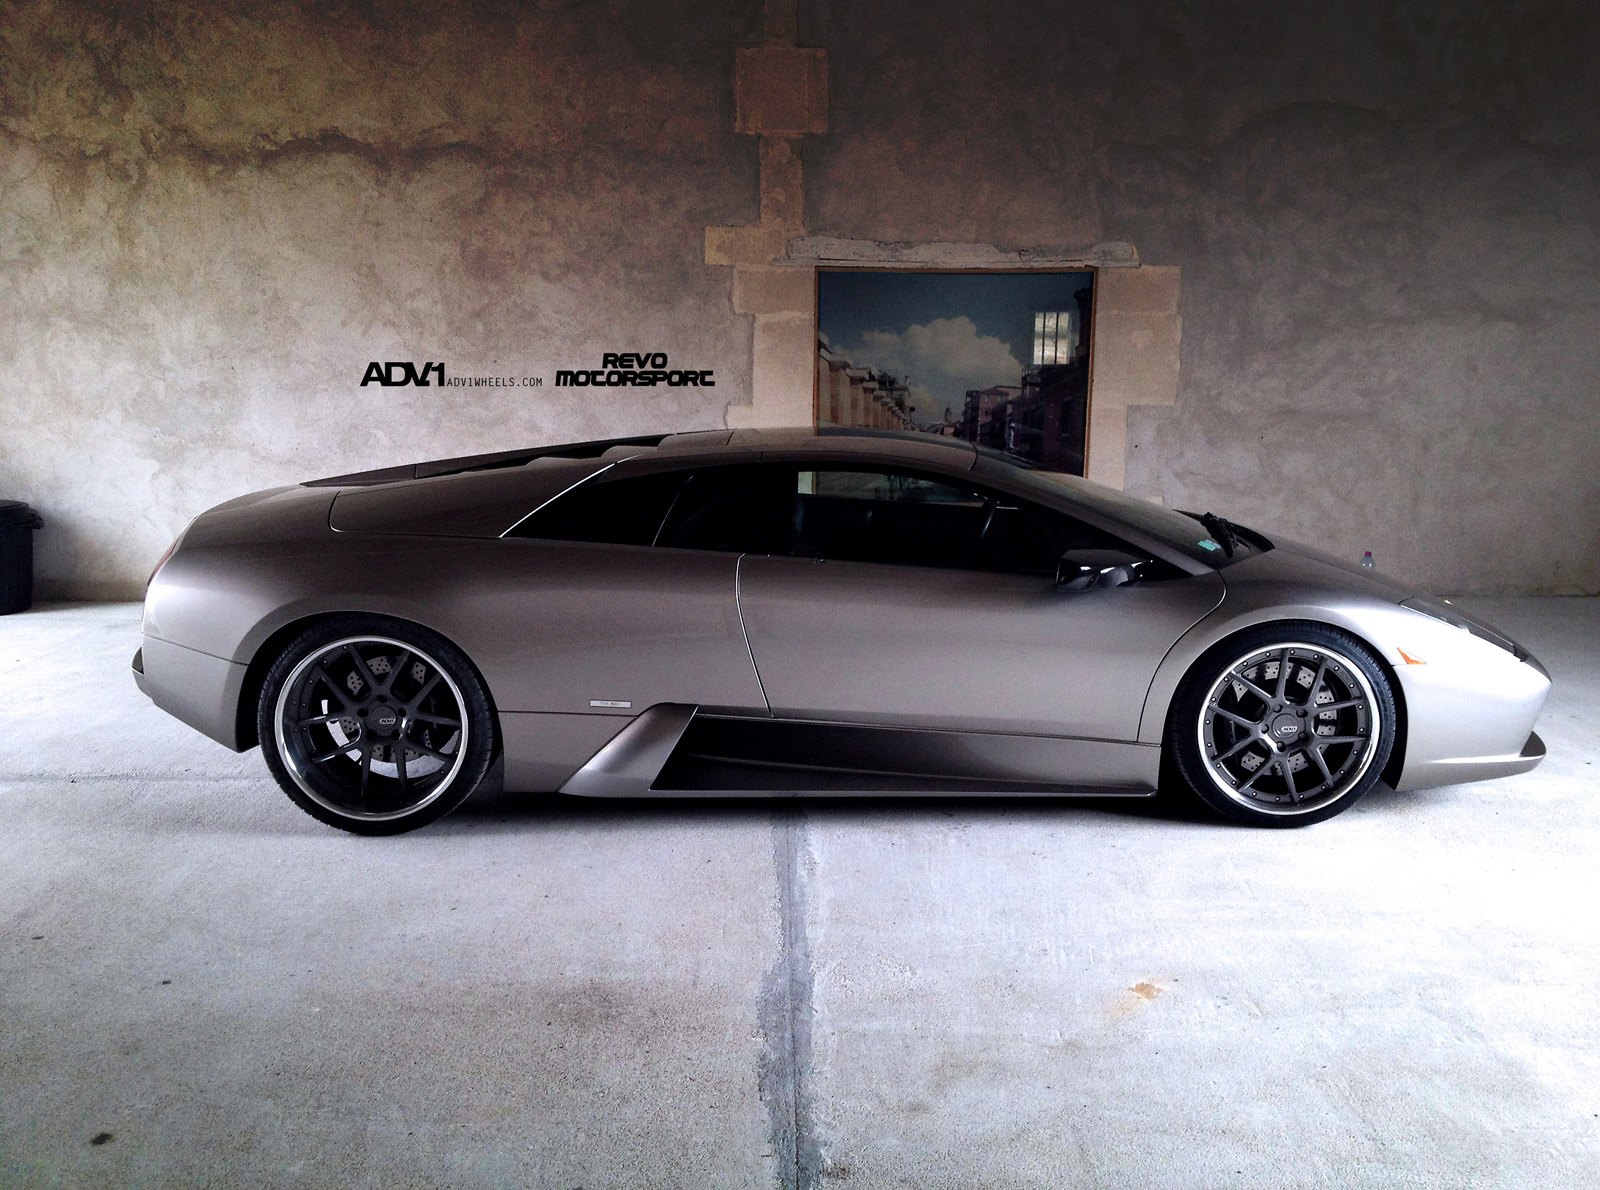 Matte Black ADV1 Rims on Gray Metallic Lamborghini Murcielago - Photo by ADV.1